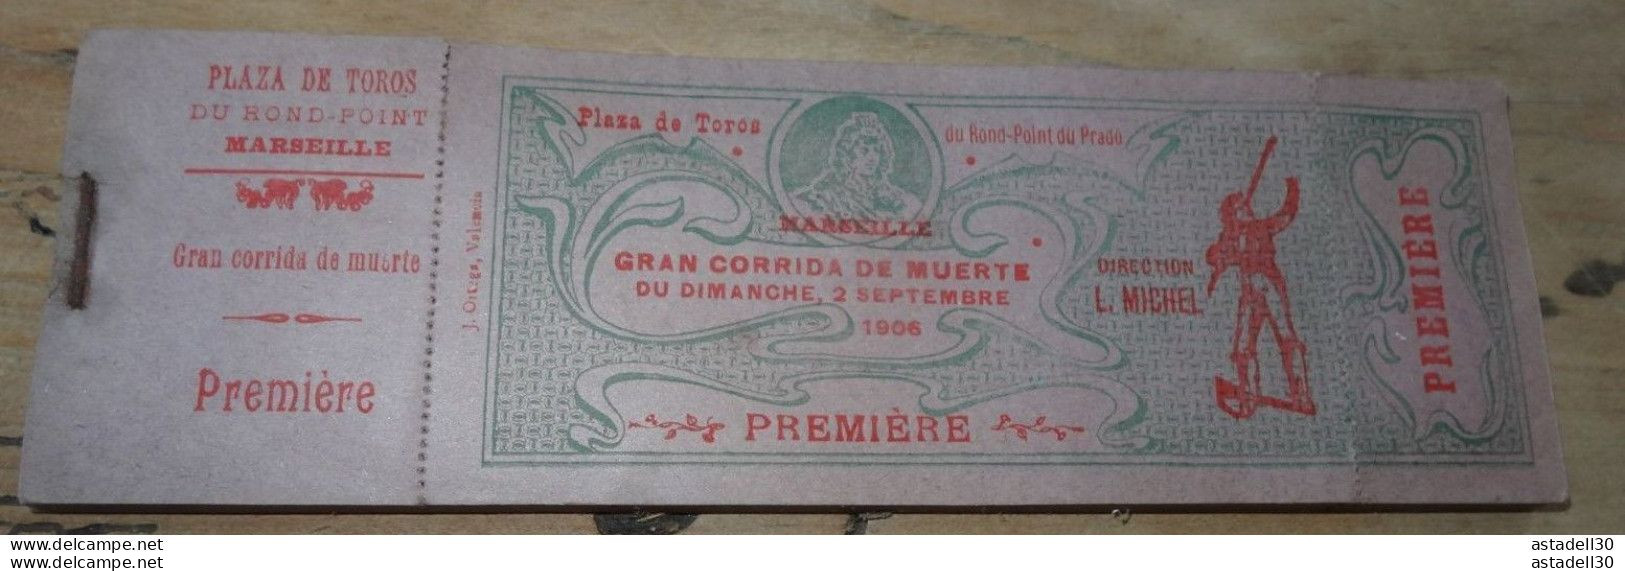 Ticket Entrée GRAN CORRIDA DE MUERTE, 02/09/1906, Plaza De Toros MARSEILLE ............. TIC-COR1..... Caisse9 - Tickets D'entrée